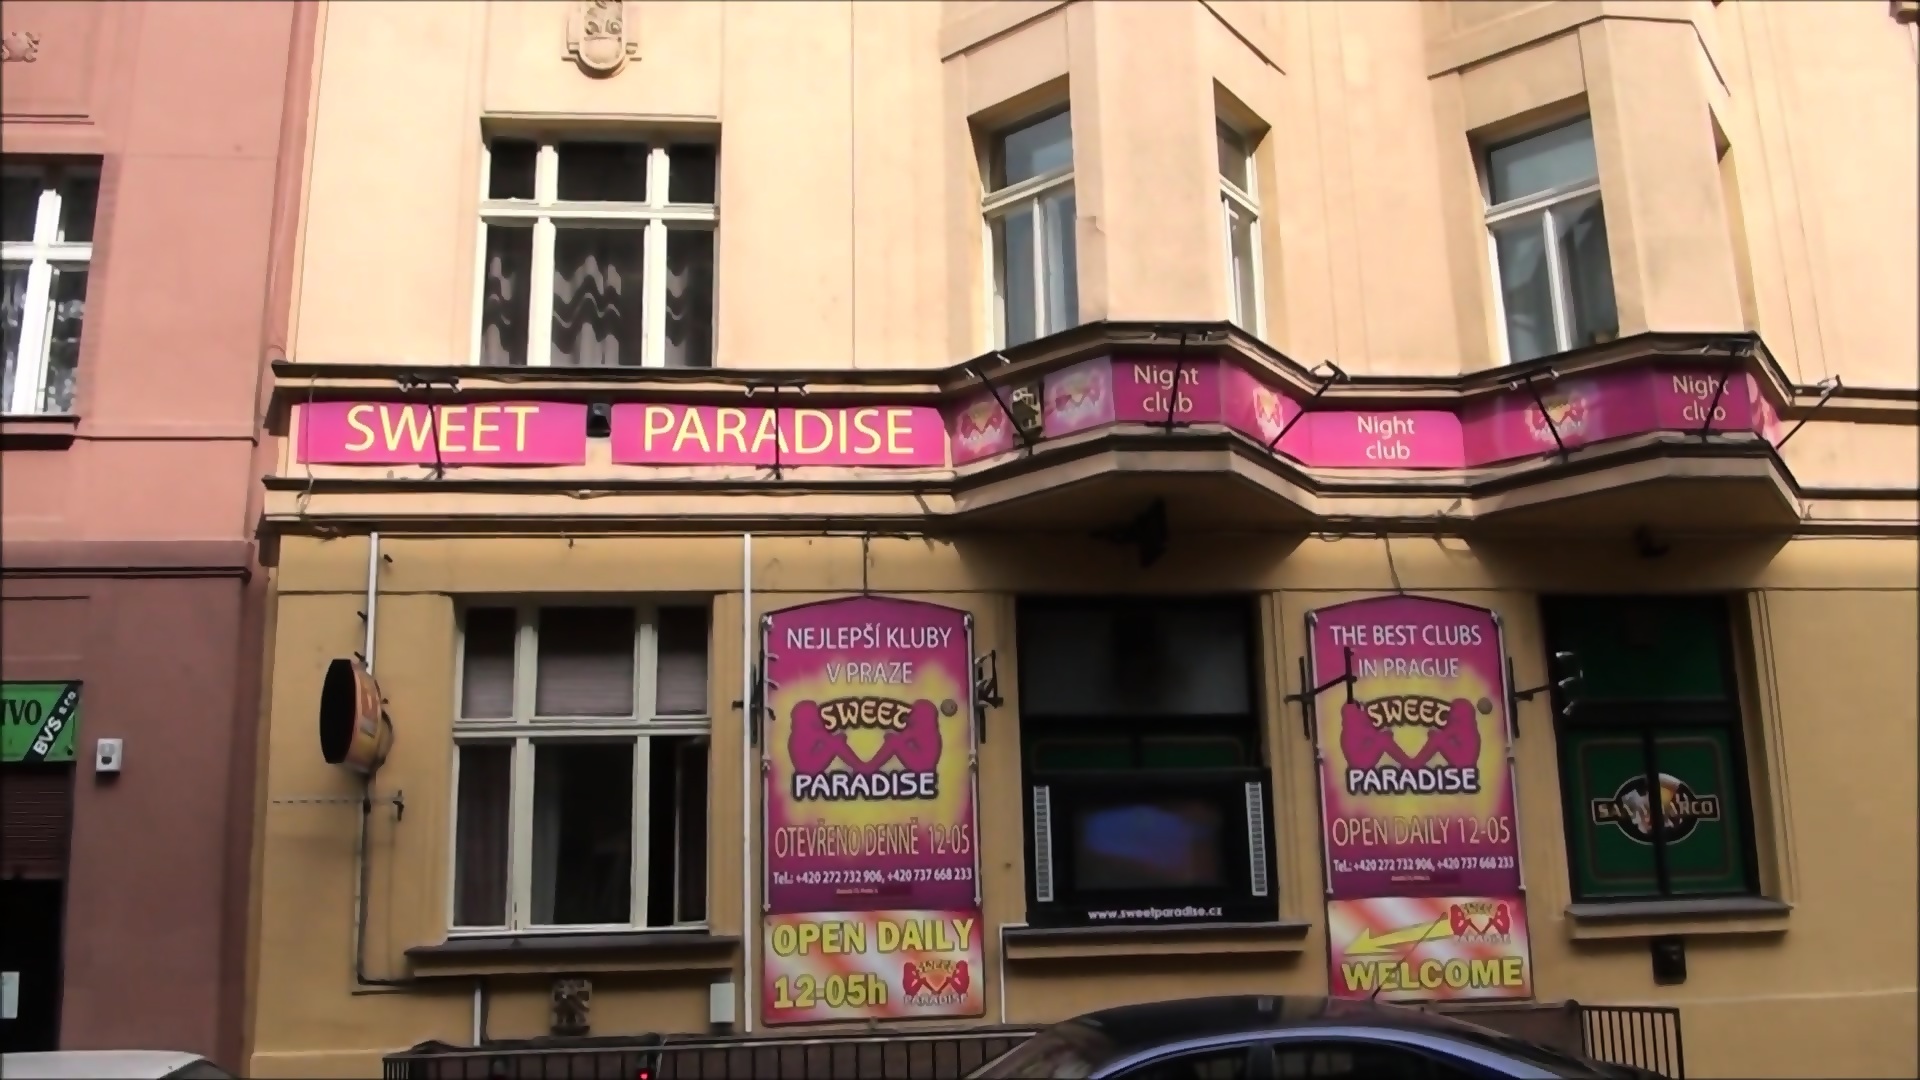 Sweet paradise prague czech republic